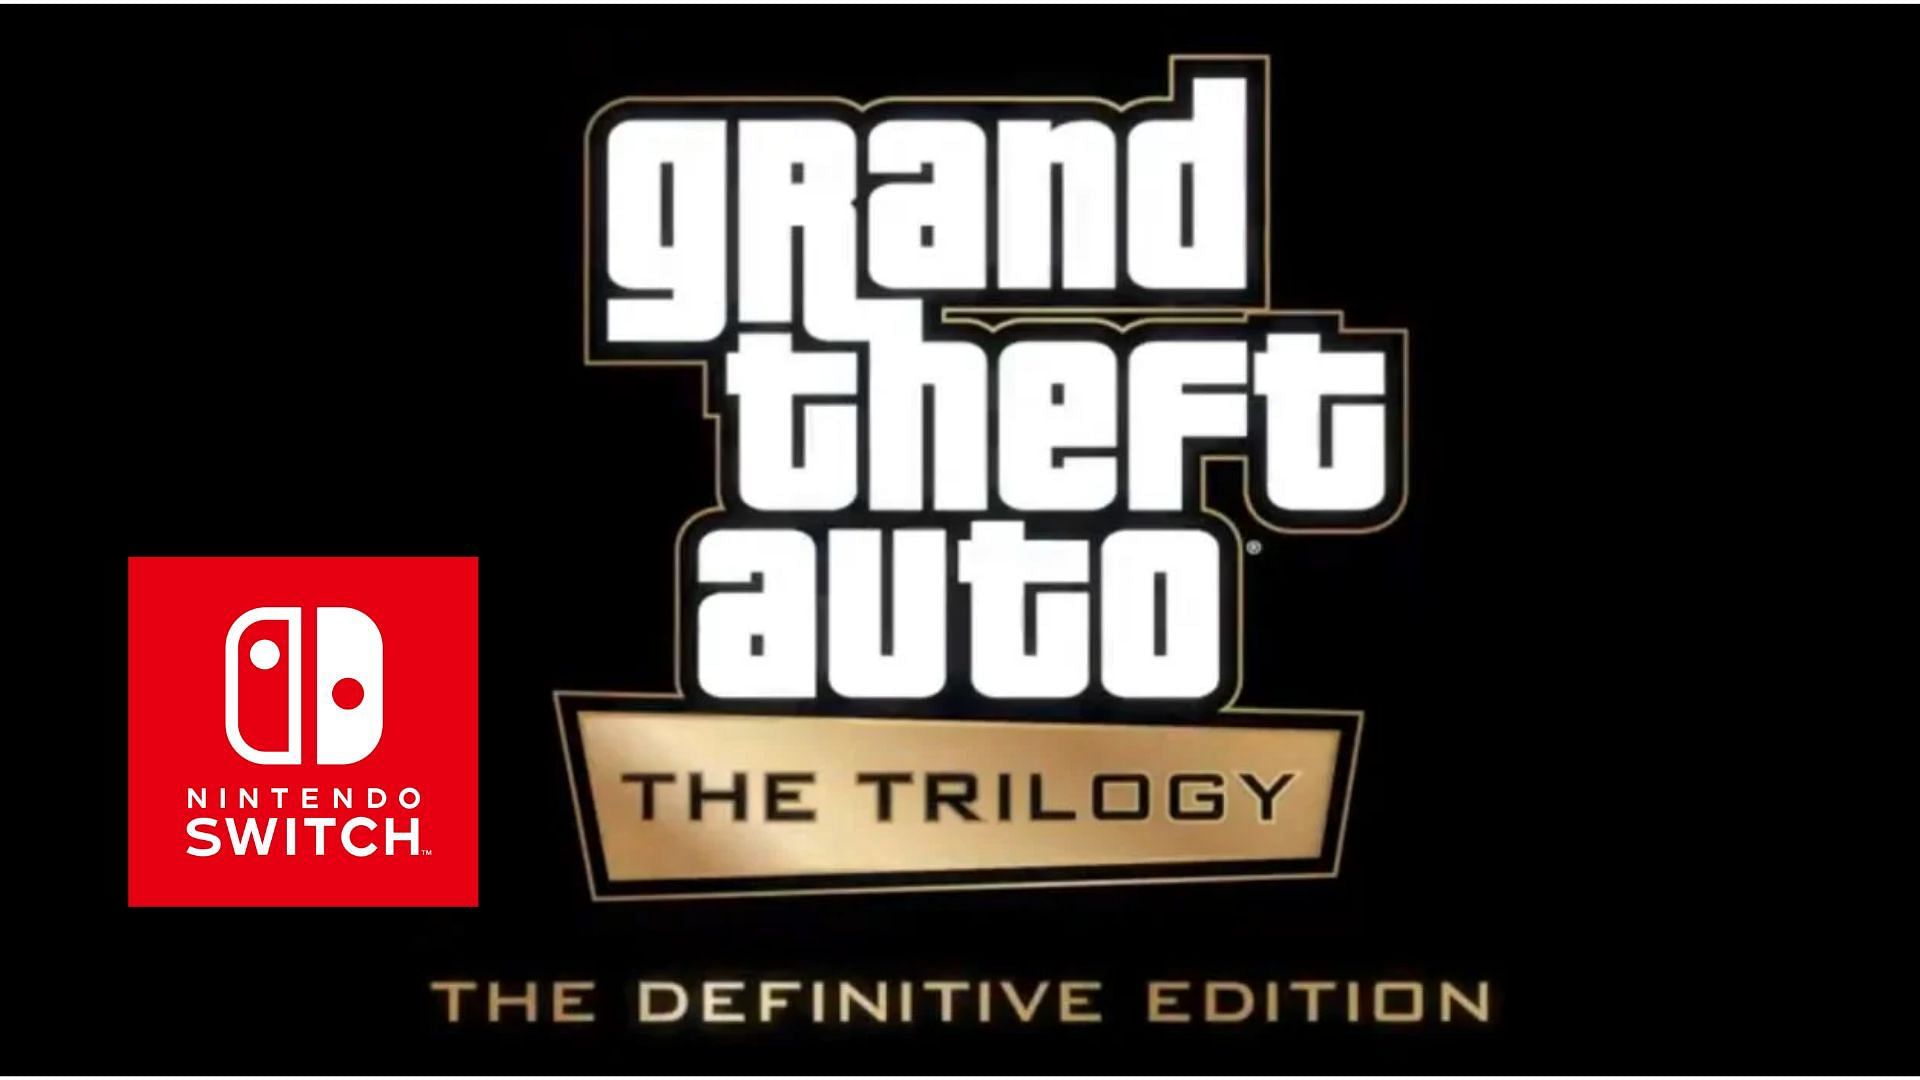 GTA The Trilogy file sizes revealed by Nintendo (Image via Sportskeeda)